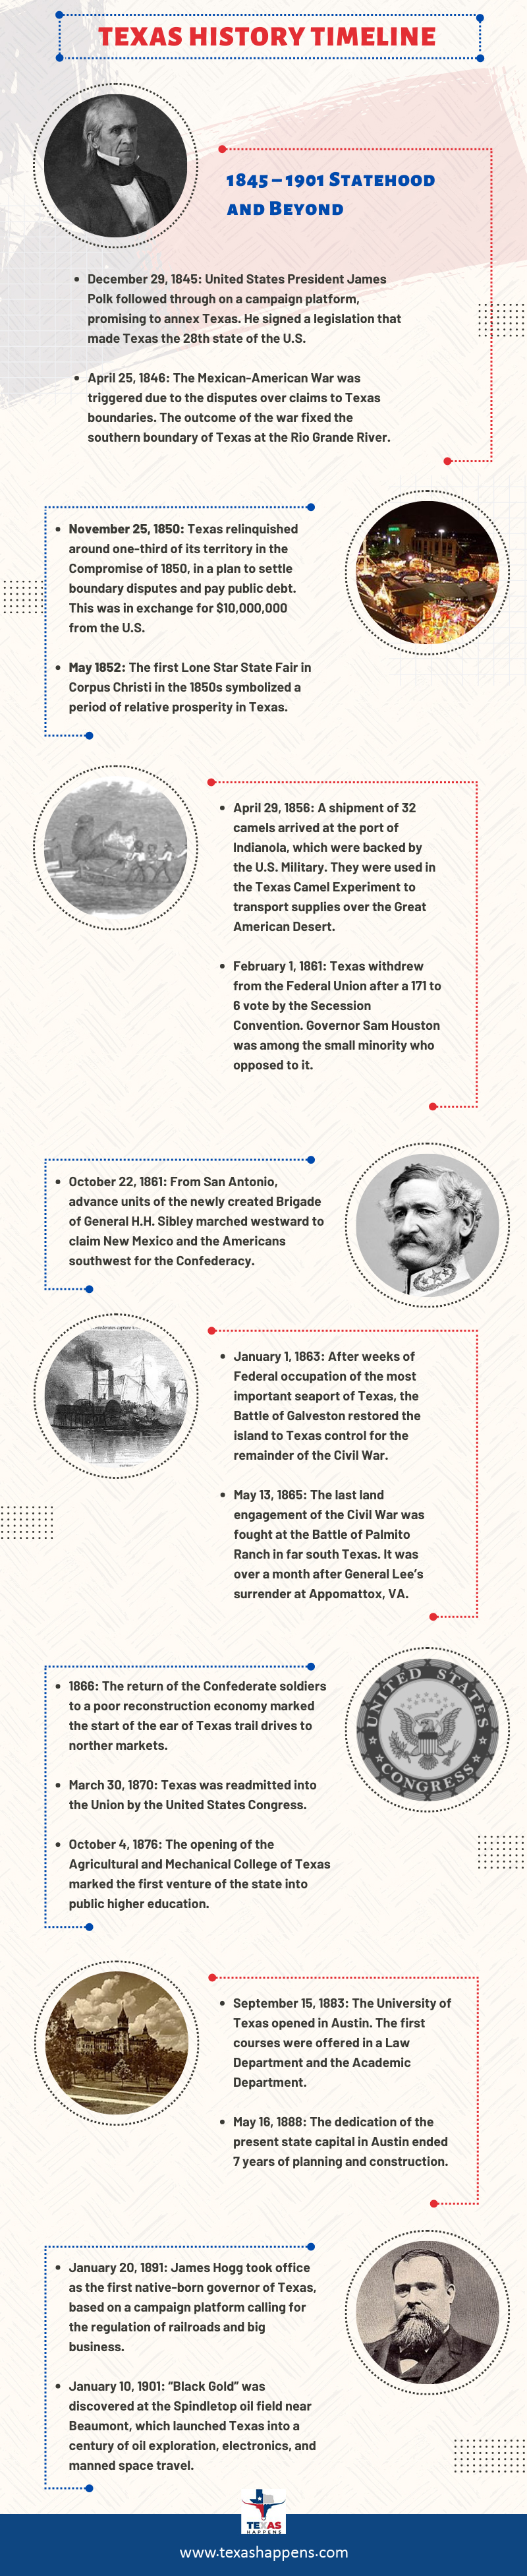 Texas History Timeline_1845 – 1901 Statehood and Beyond